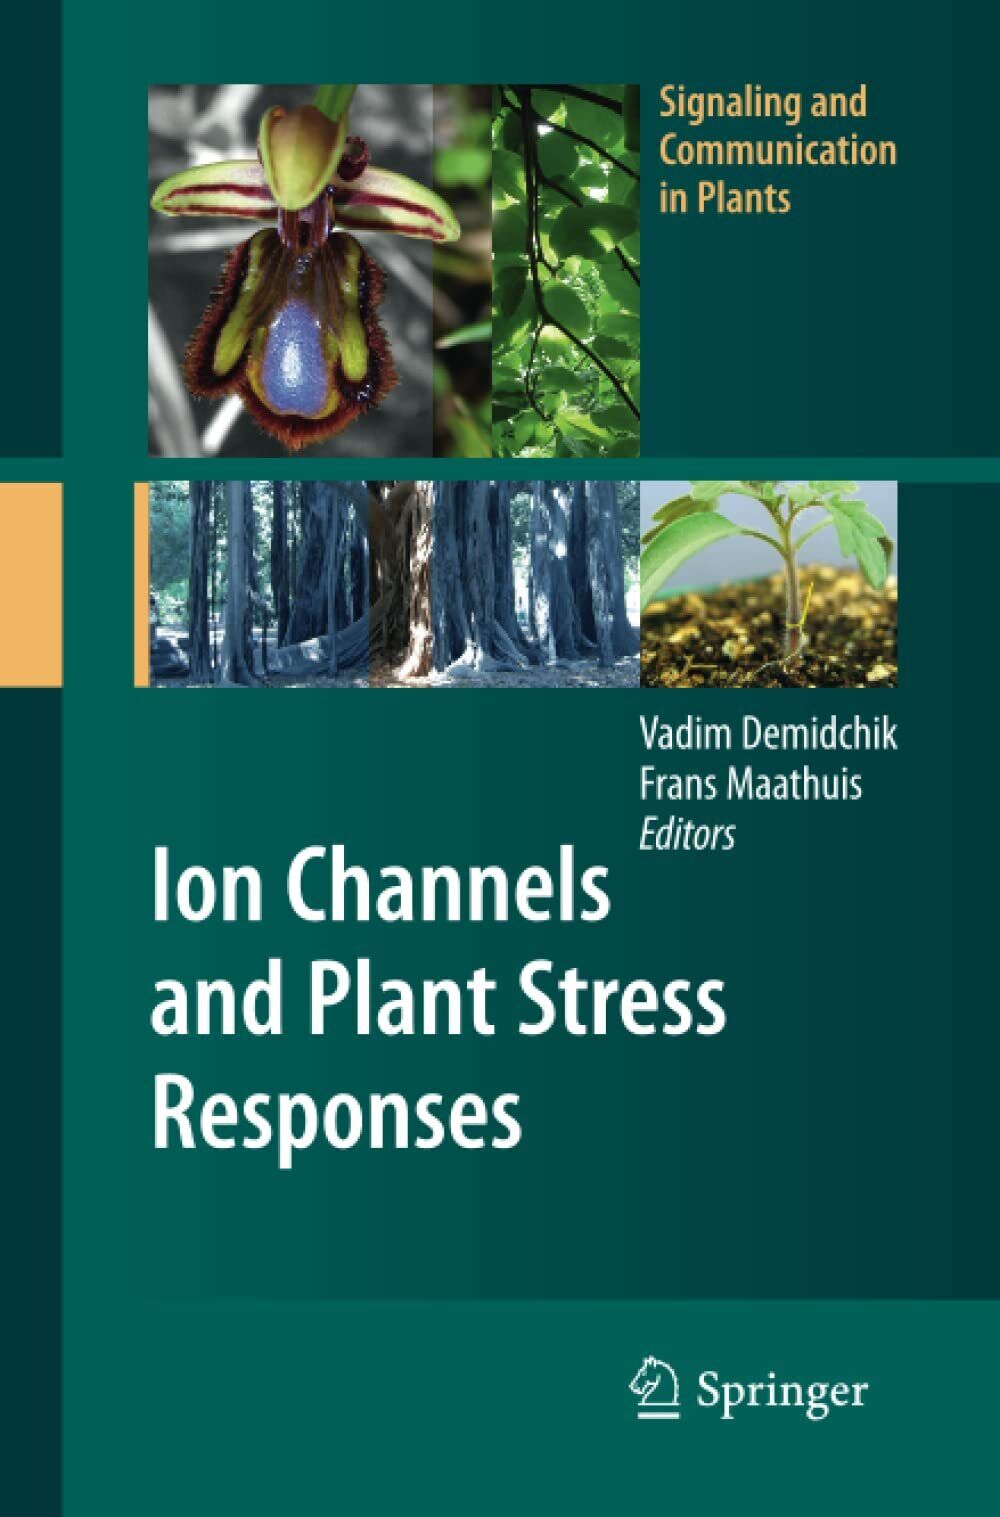 Ion Channels and Plant Stress Responses - Vadim Demidchik - Springer, 2012